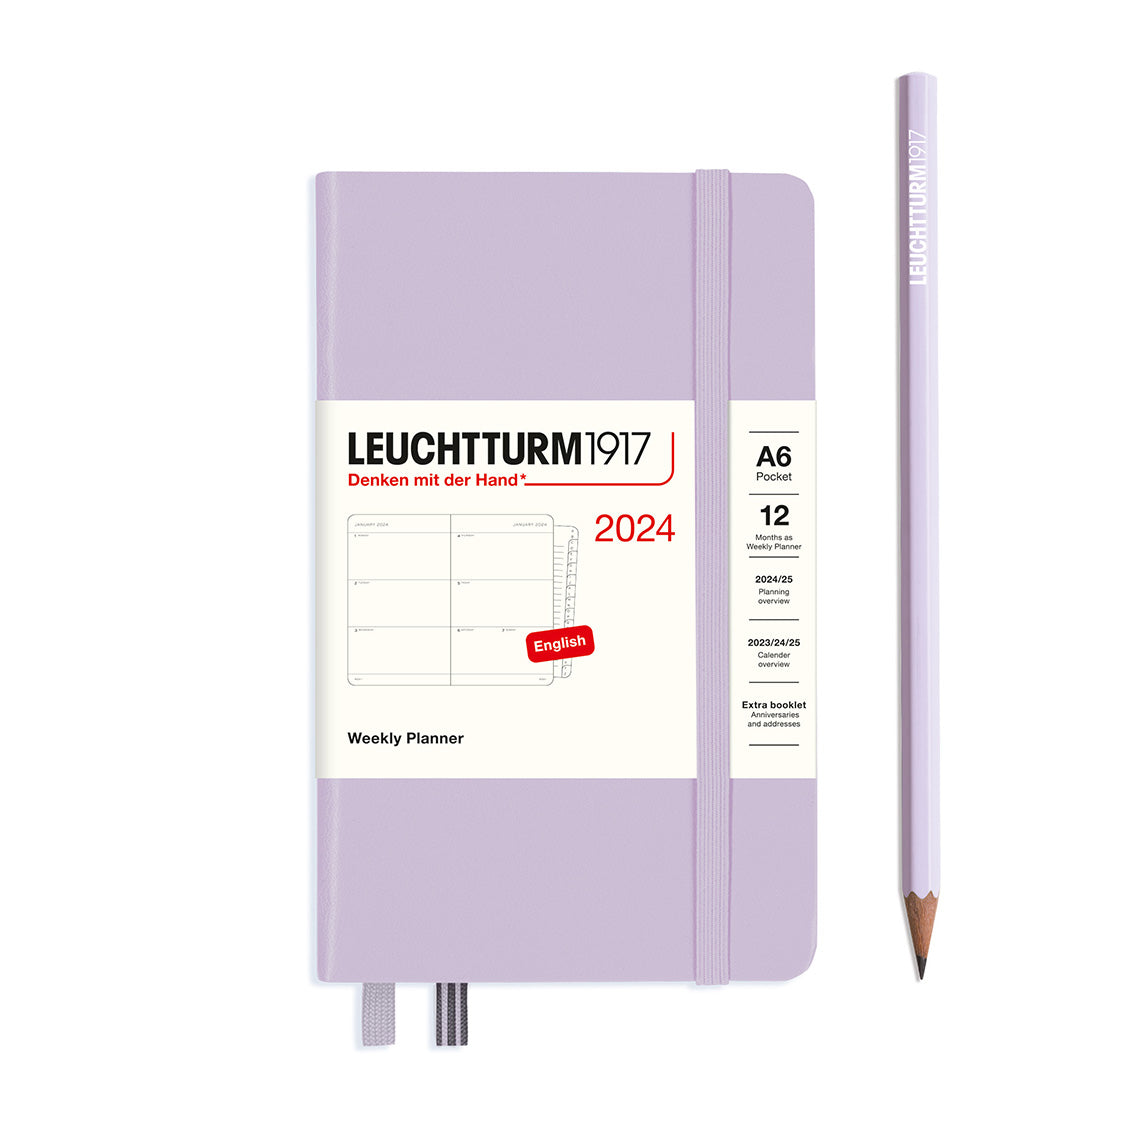 Leuchtturm Weekly Planner - Pocket (A6) 3 1/2" x 6"